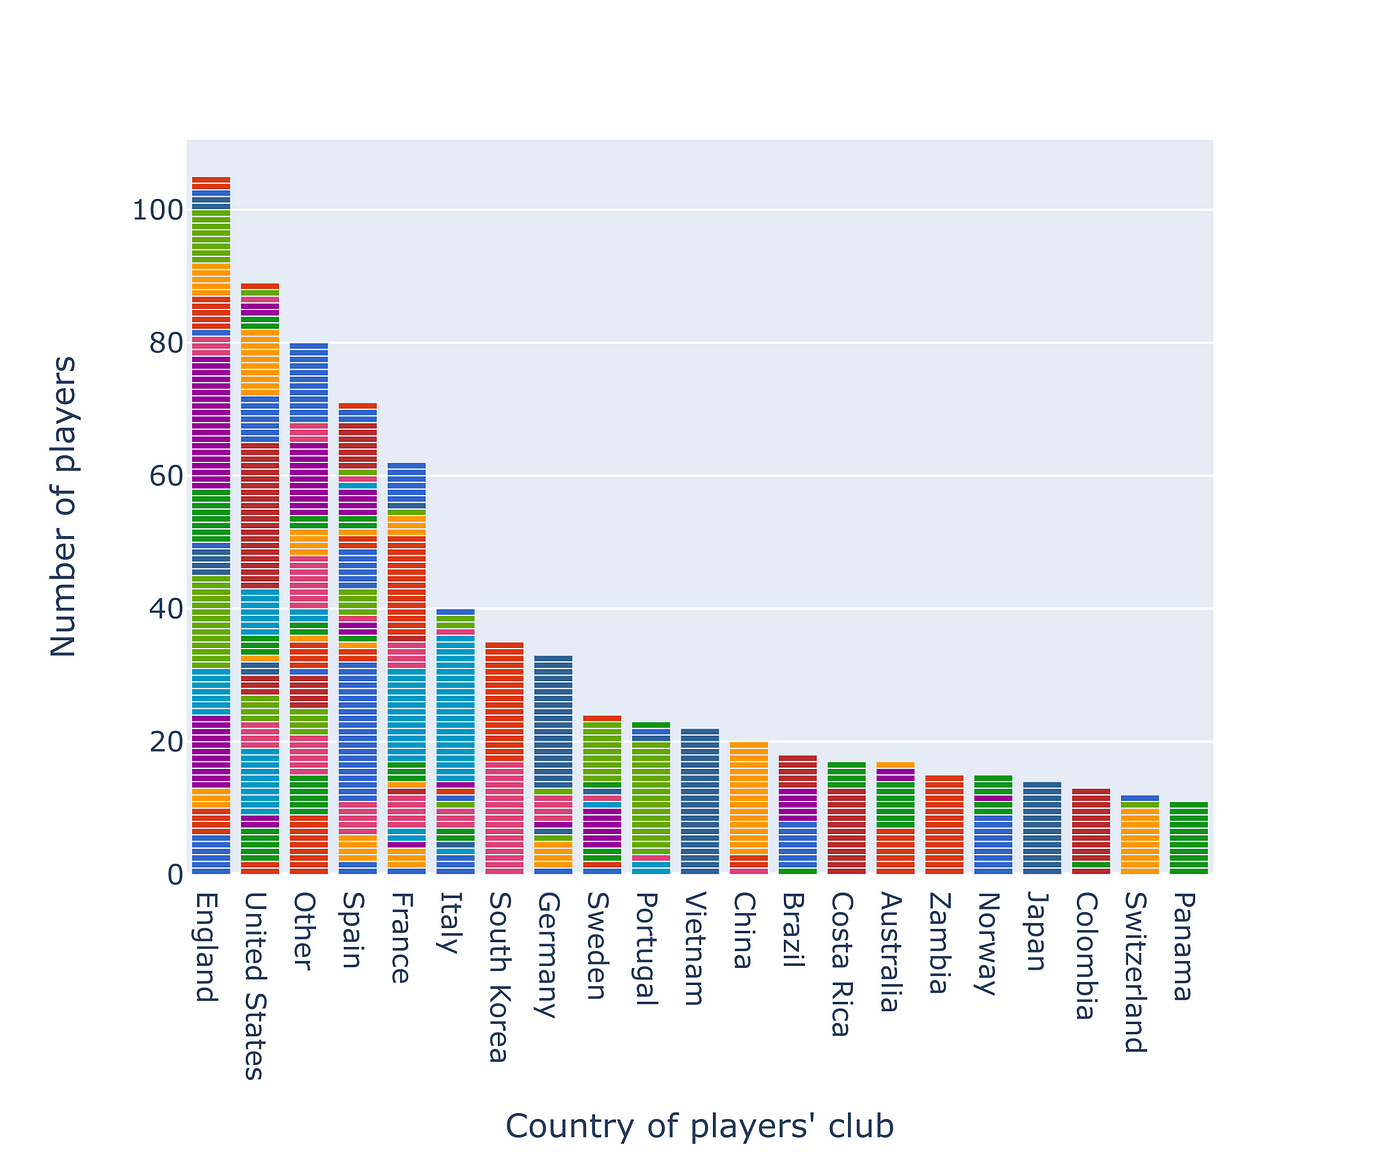 FIFA Men's World Ranking - Wikipedia